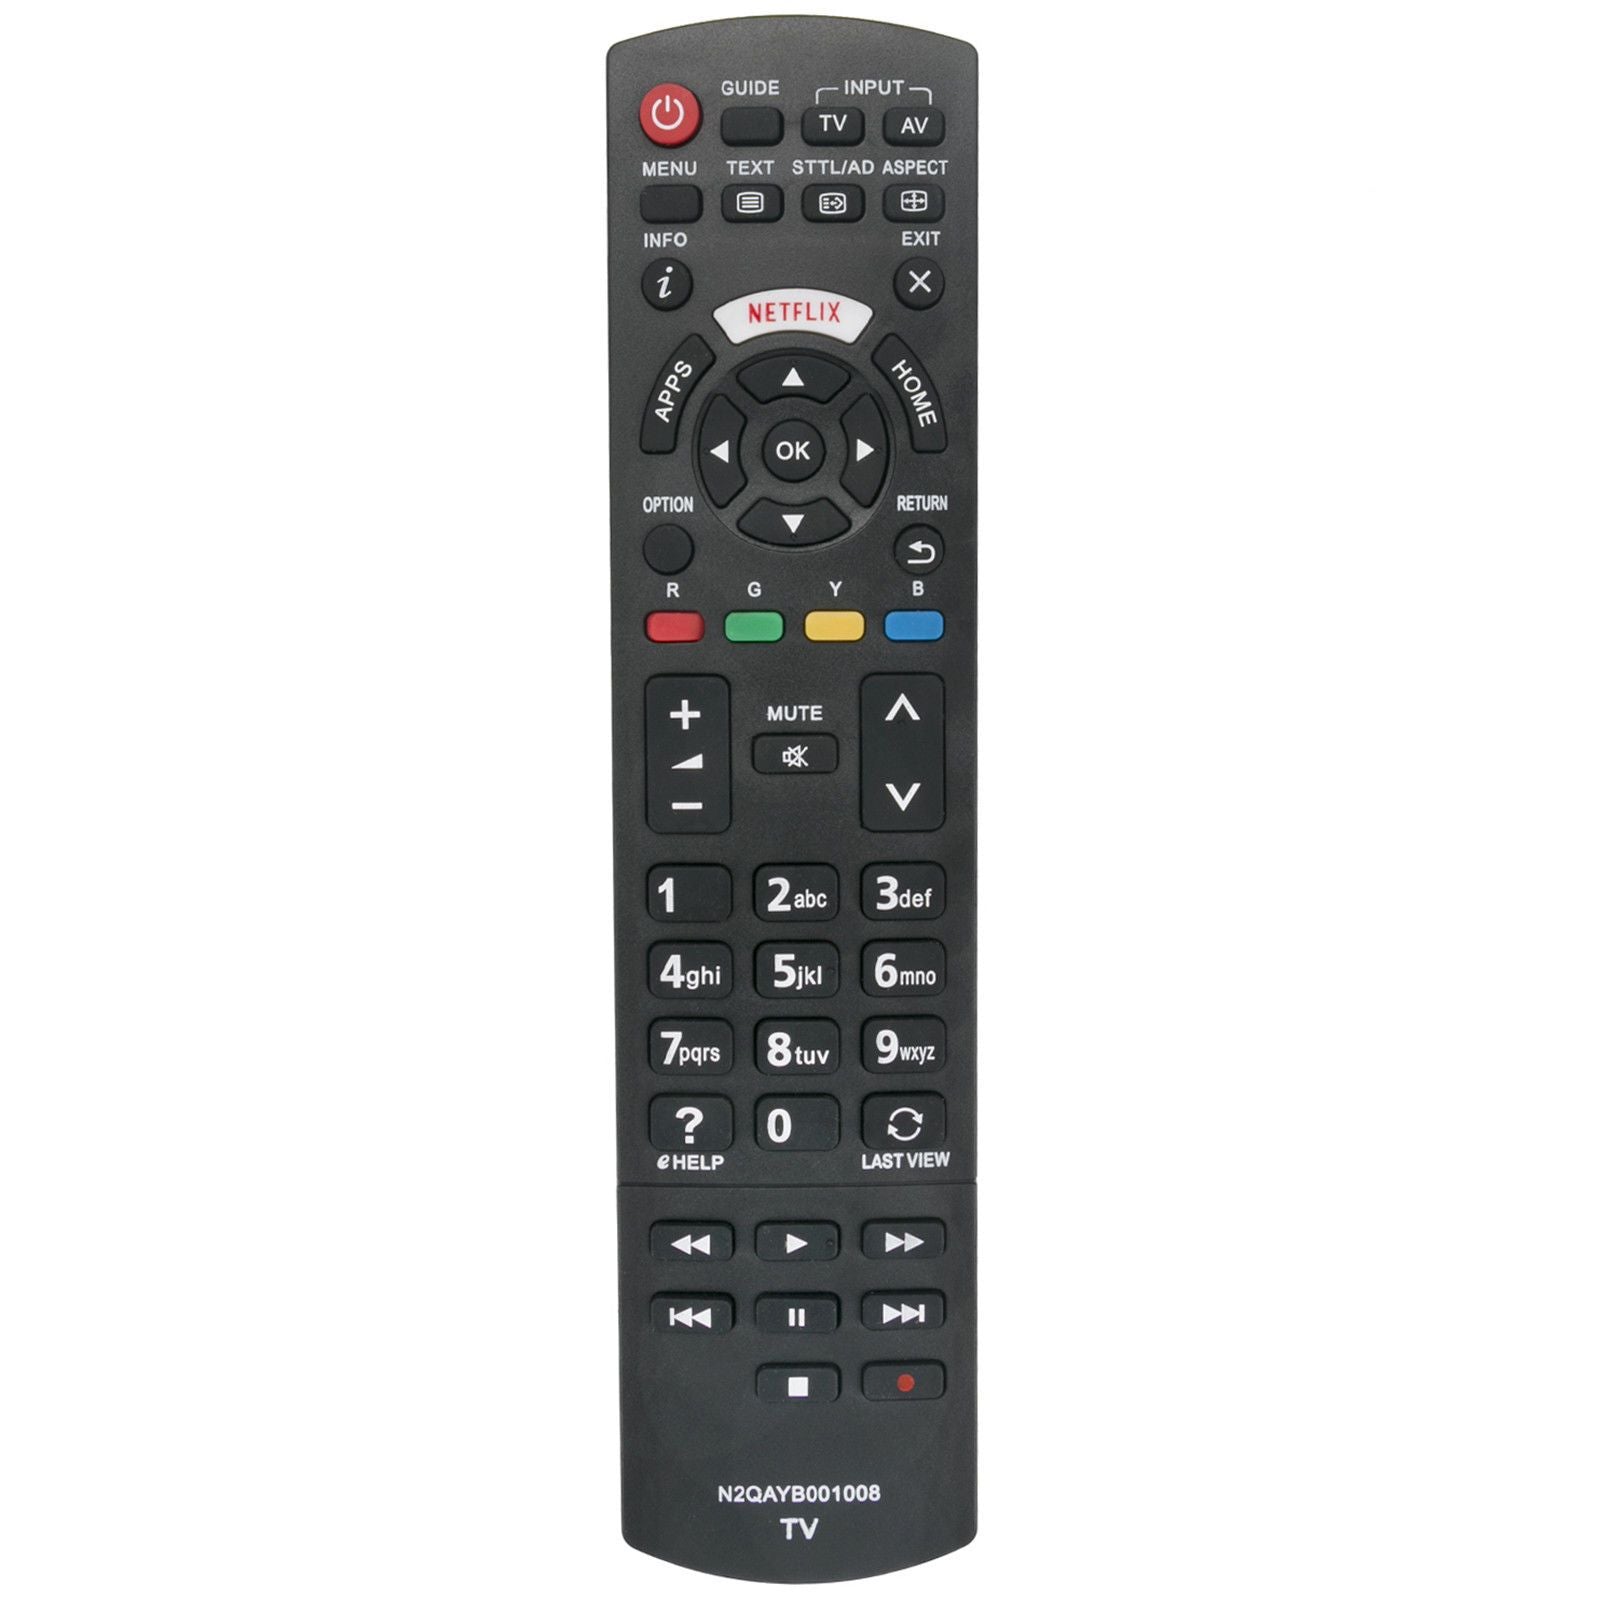 N2QAYB001008 Netflix Replacement Remote Control for Panasonic Plasma TV TH-55CS650Z TH-40DS610U